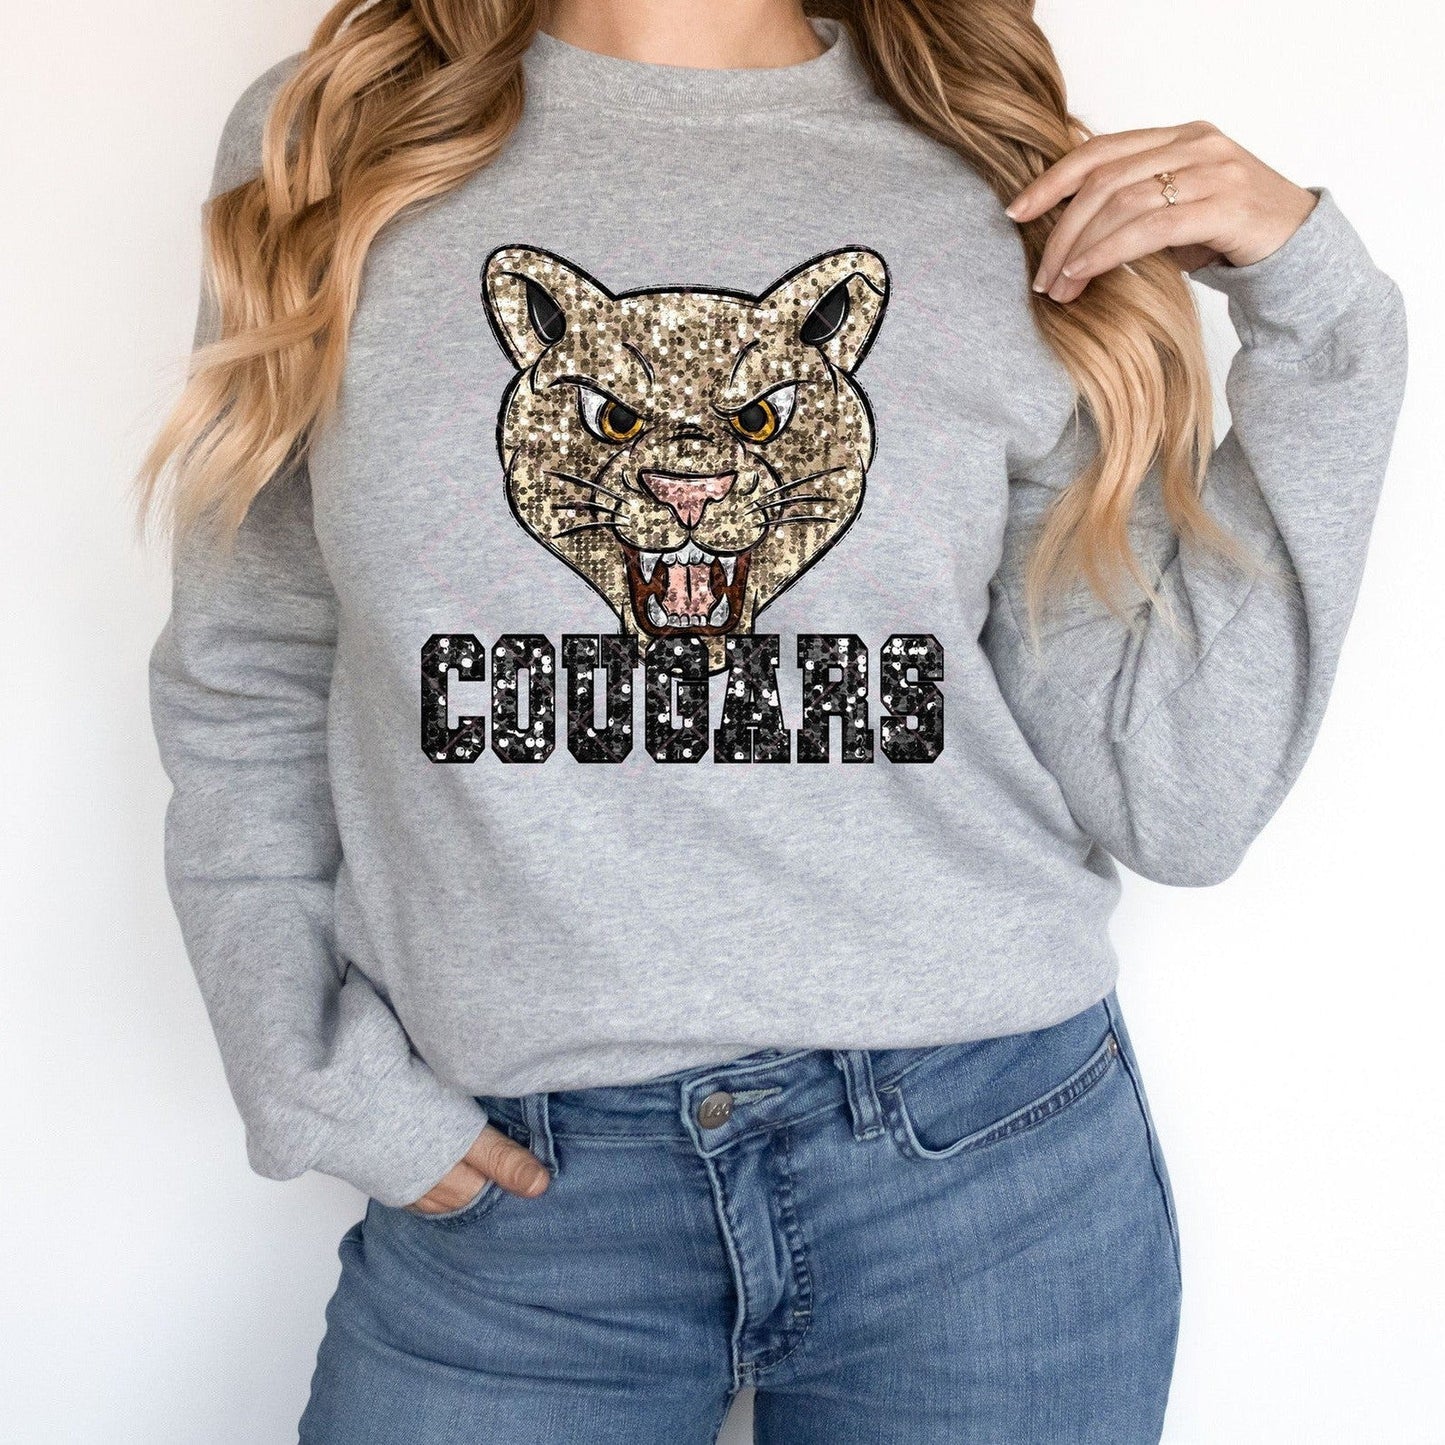 Cougars Black Sequin